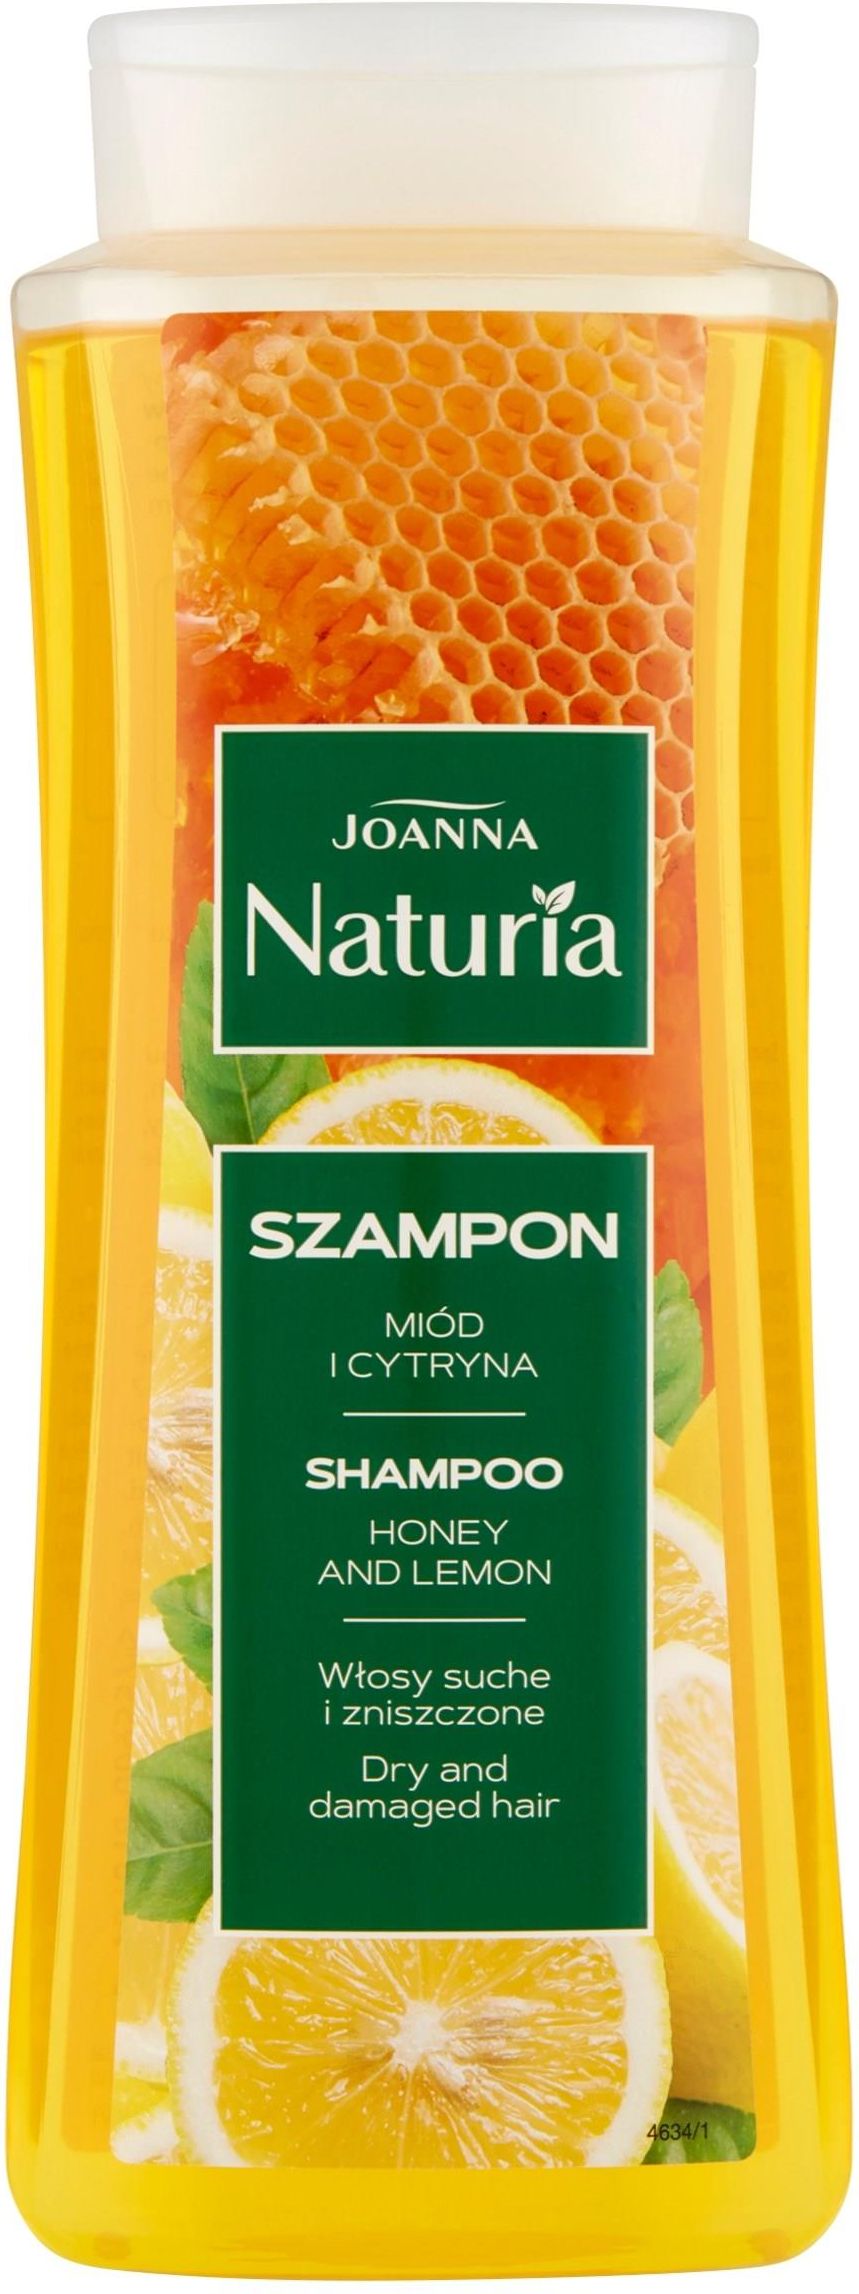 joanna szampon miodem opinie